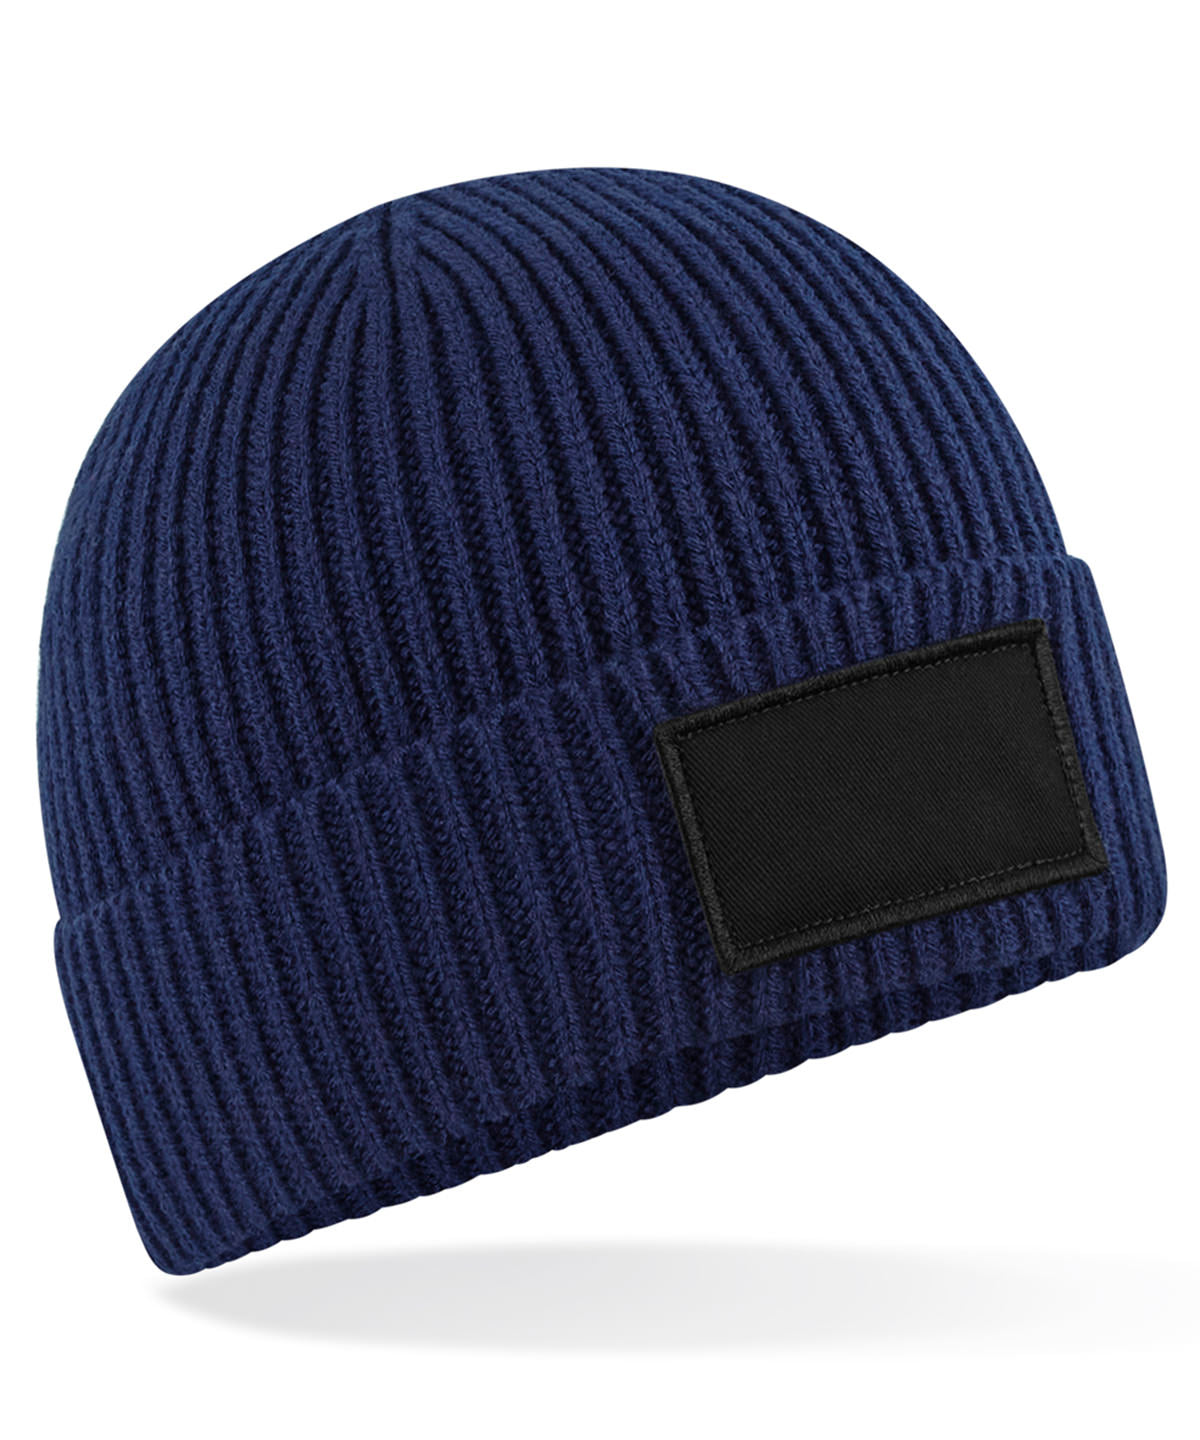 Personalised Hats - Dark Brown Beechfield Fashion patch beanie